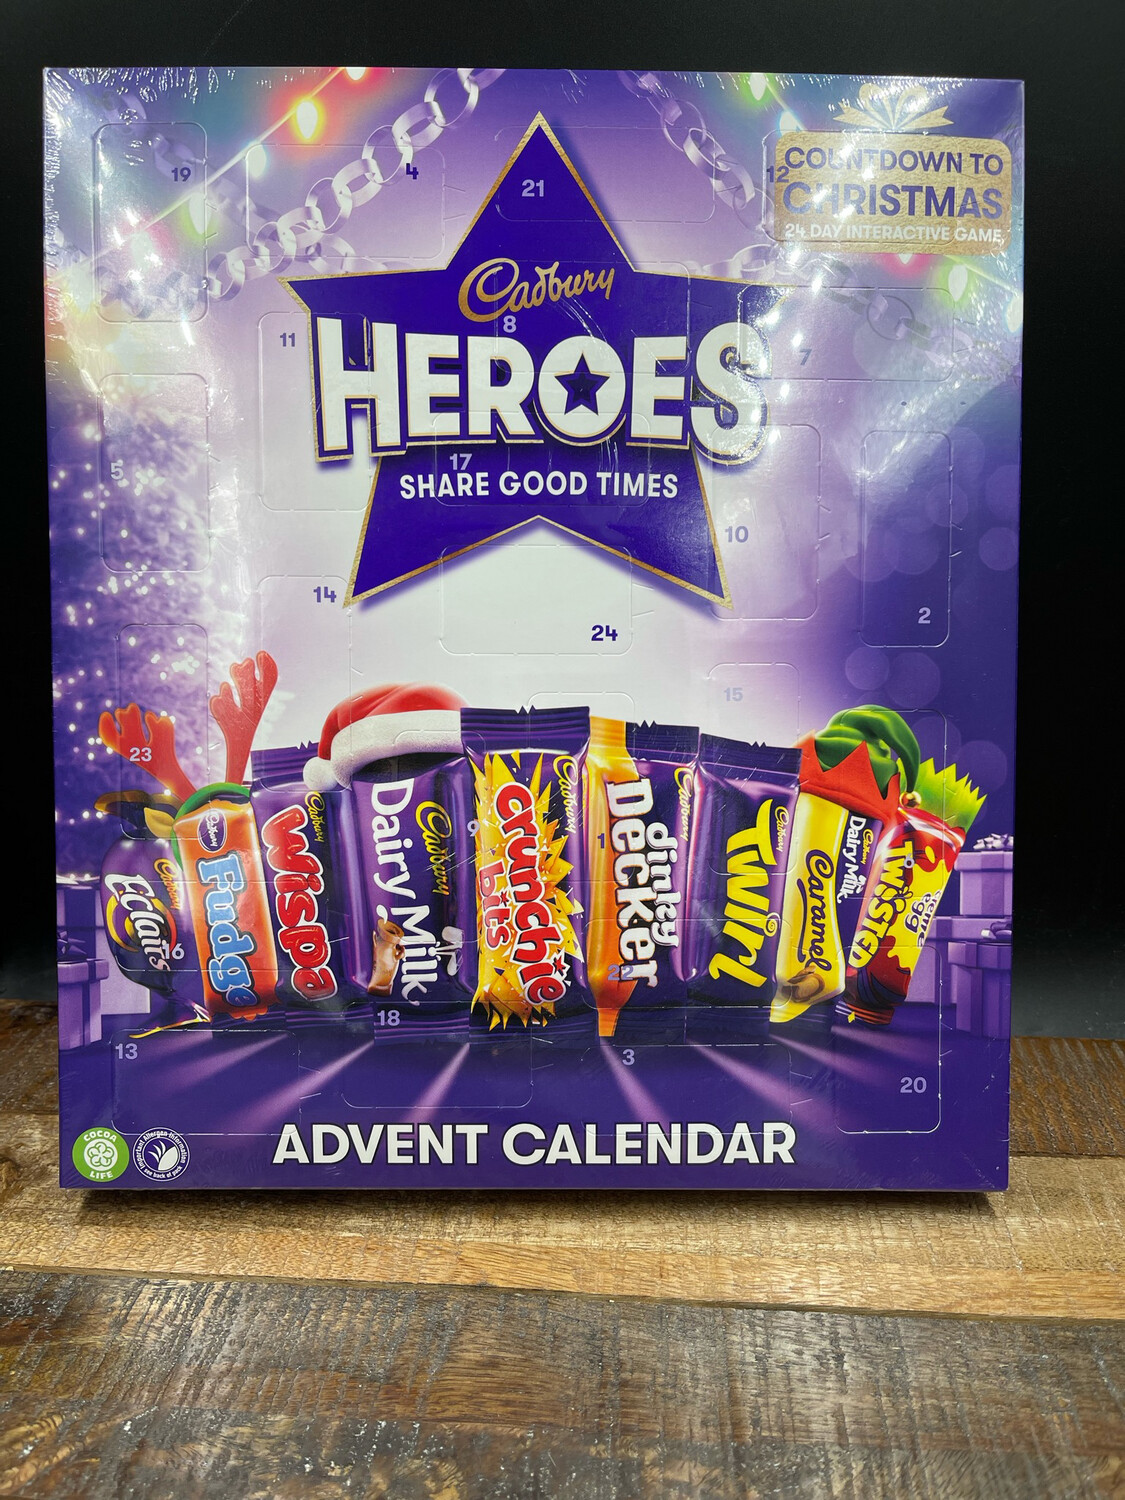 Cadbury Heroes Advent Calendar 230g